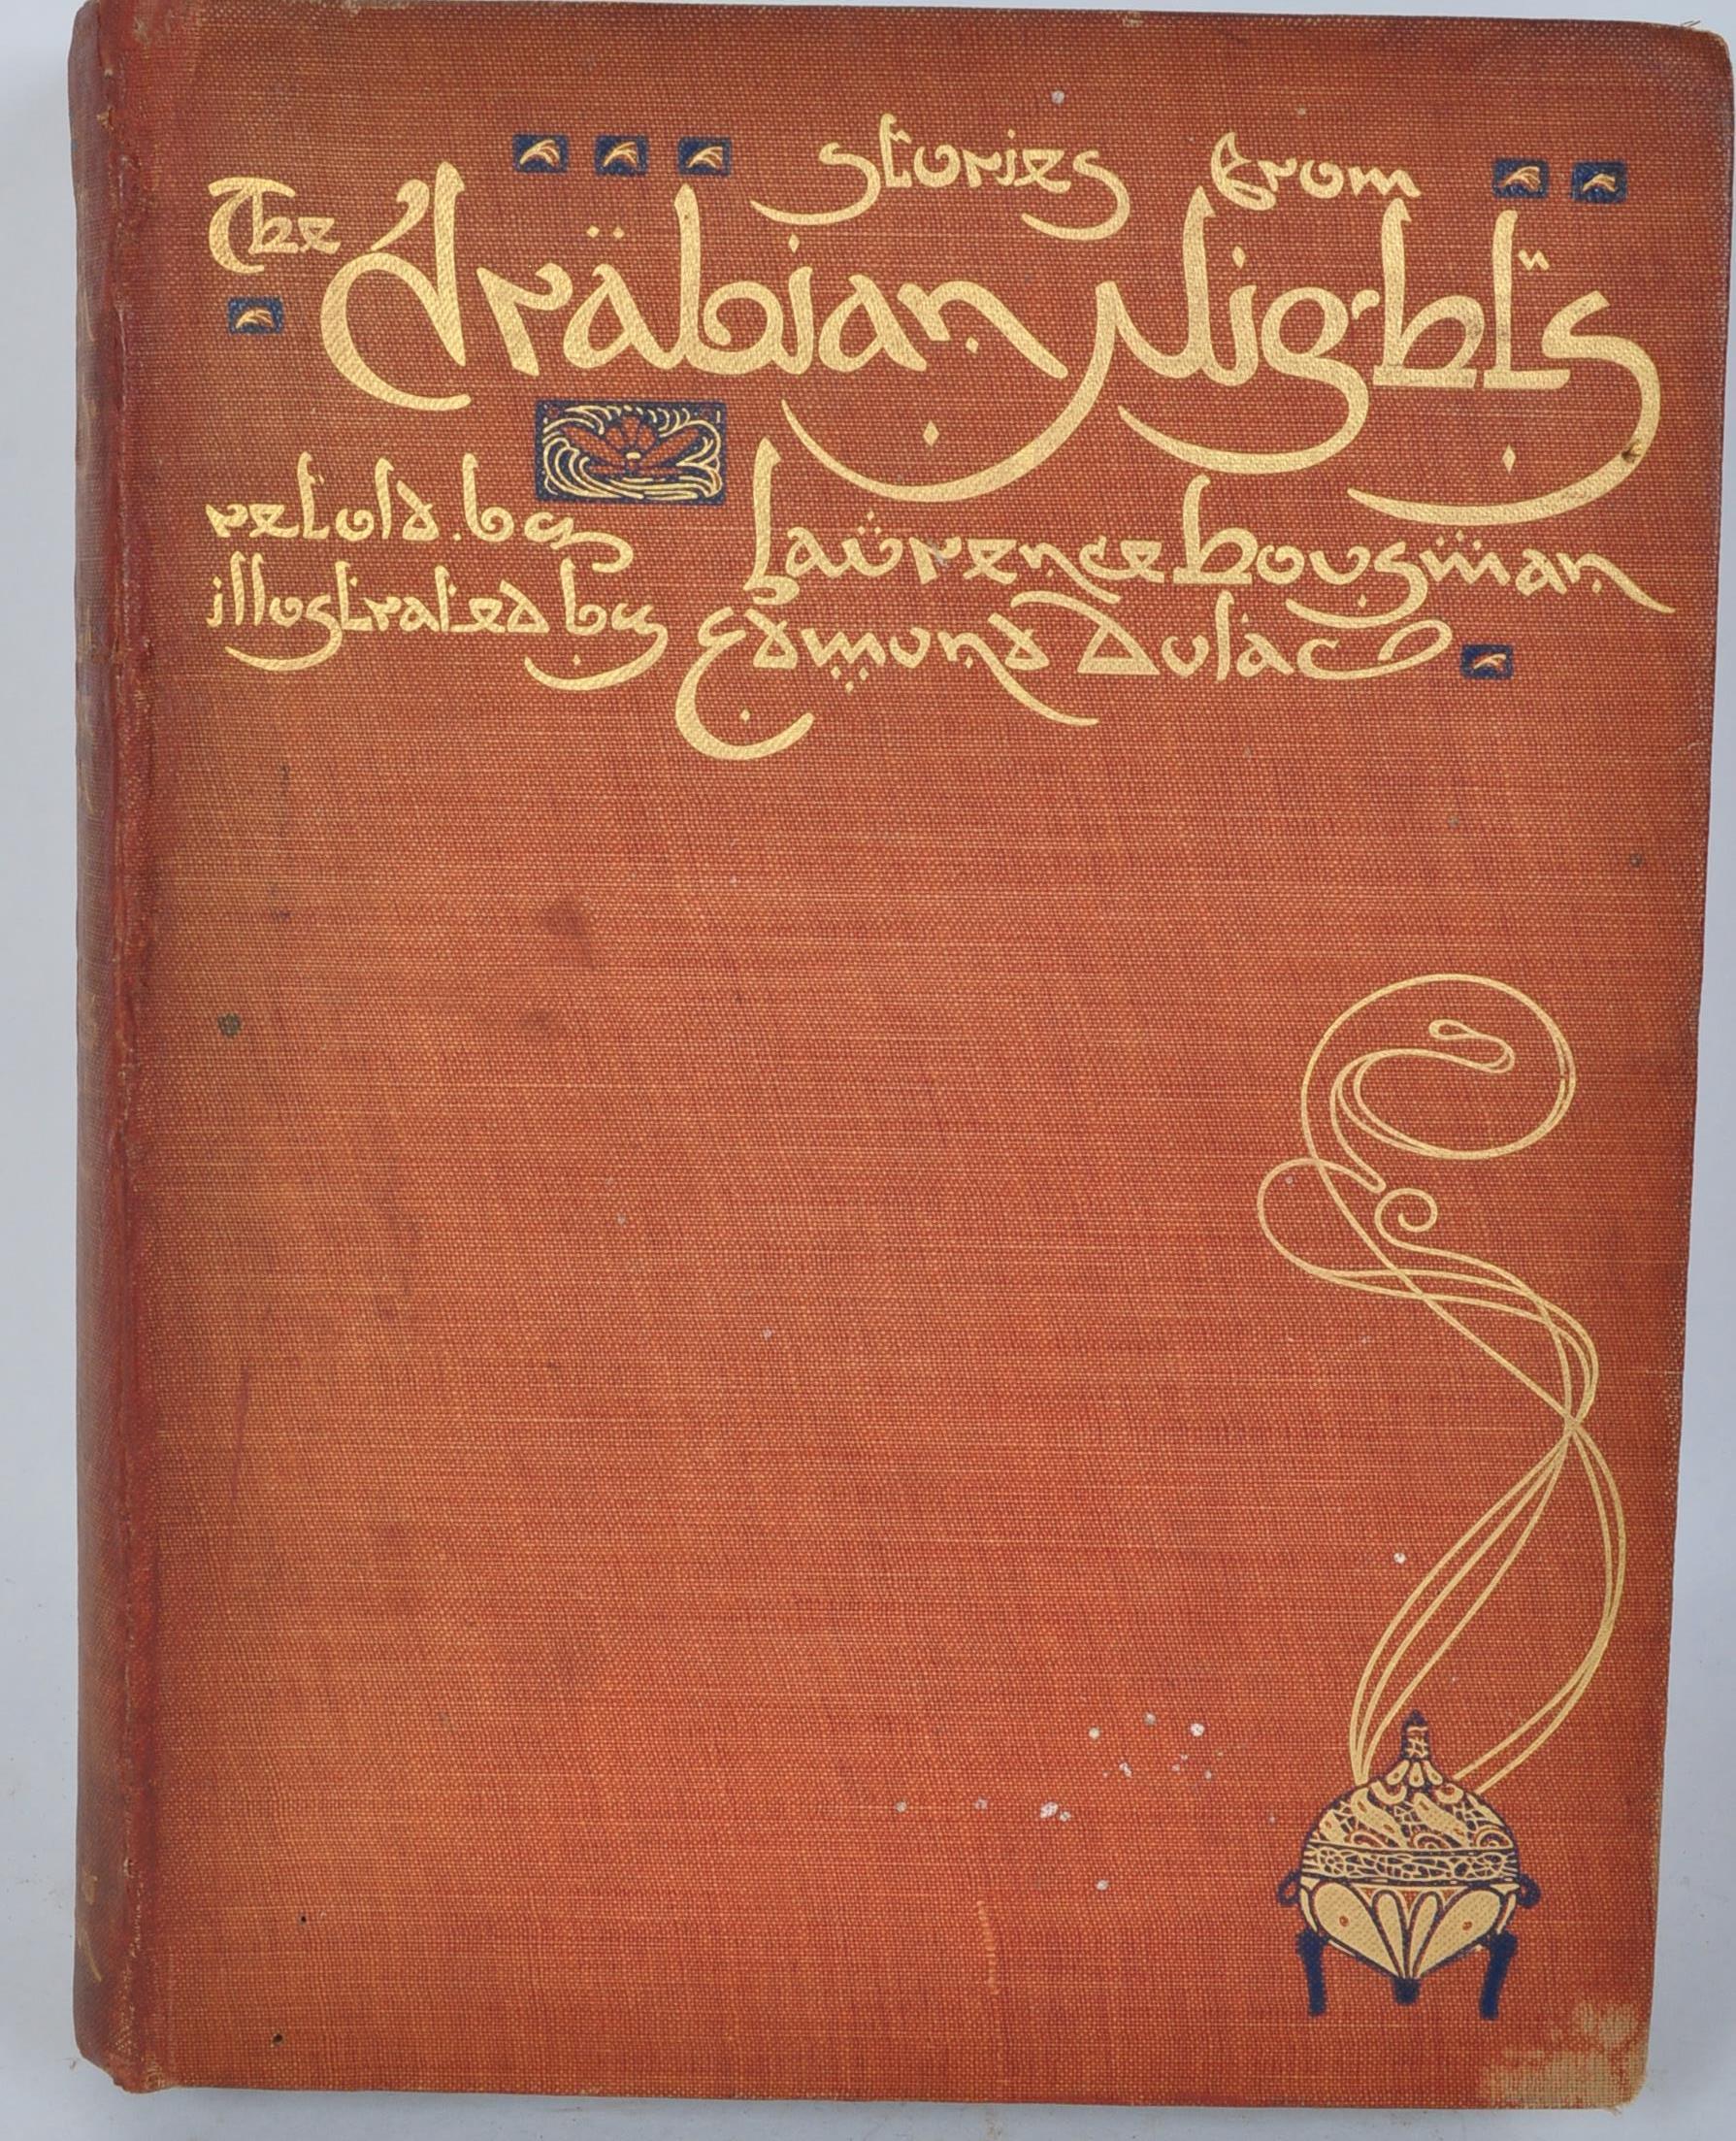 EDMUND DULAC ILLUSTATOR - STORIES FROM THE ARABIAN NIGHTS